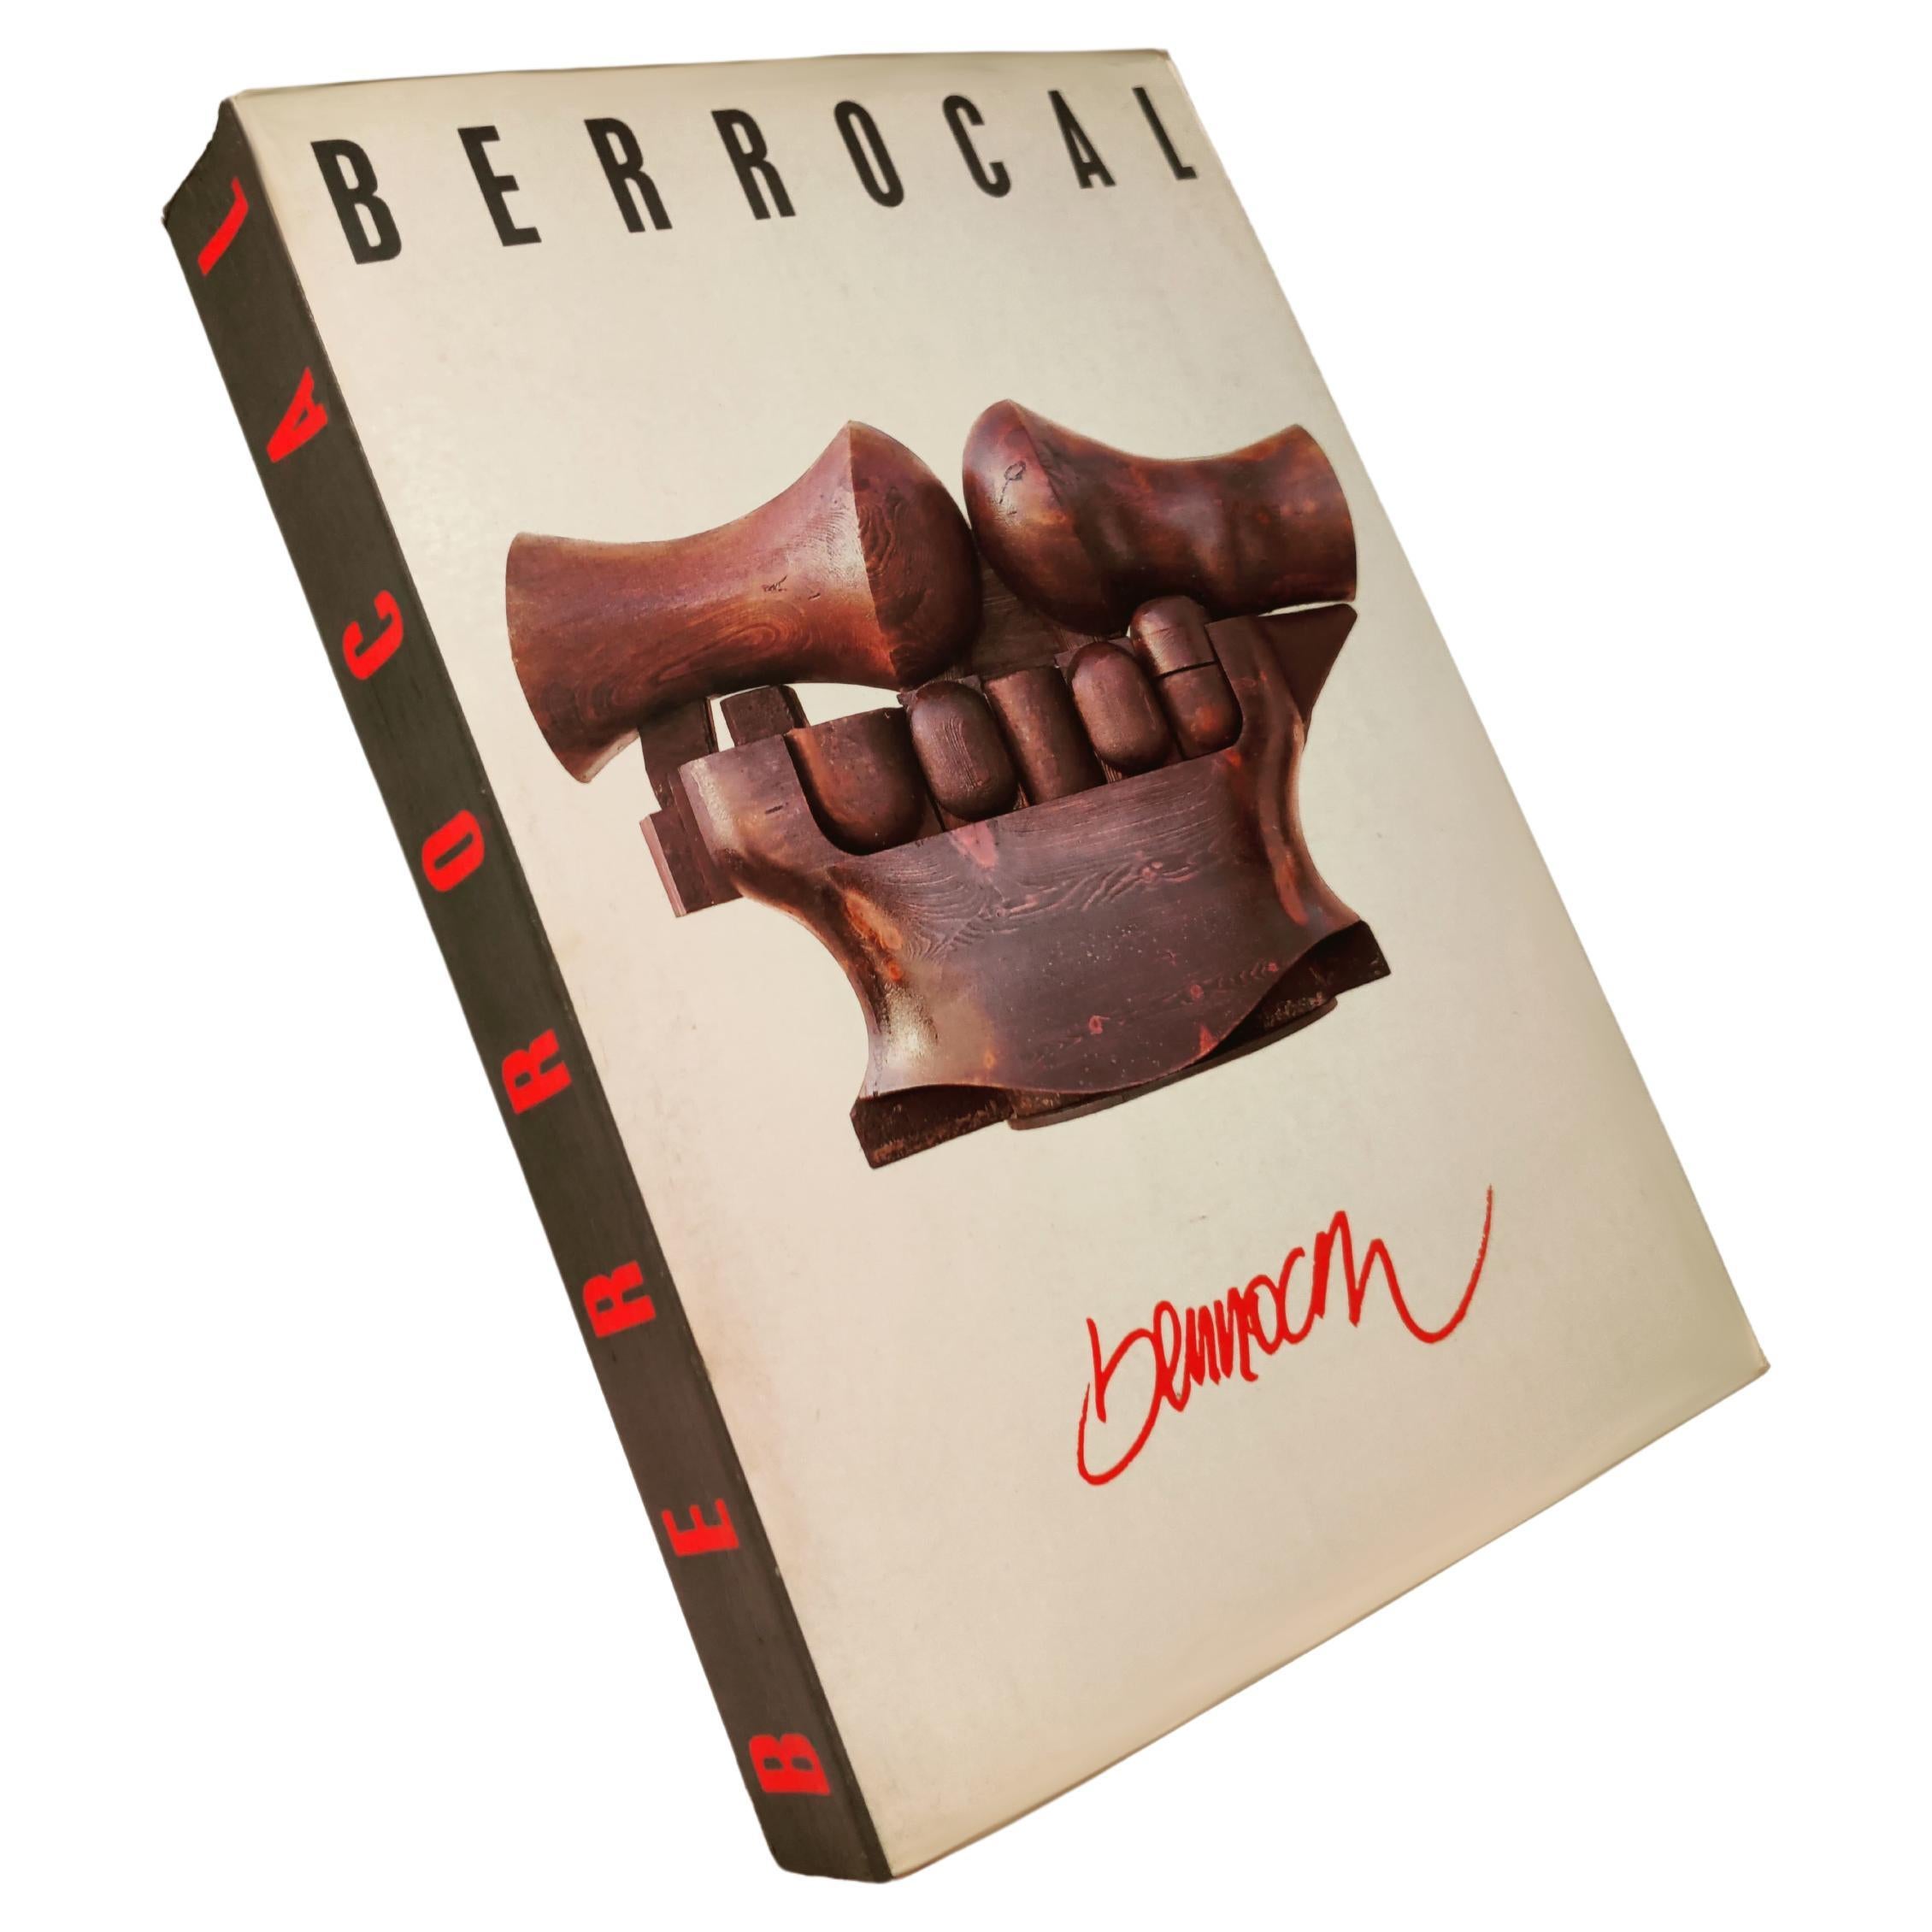 Exclusive Book Antológica Berrocal 1955- 84 Sculptures & Work of Miguel Berrocal For Sale